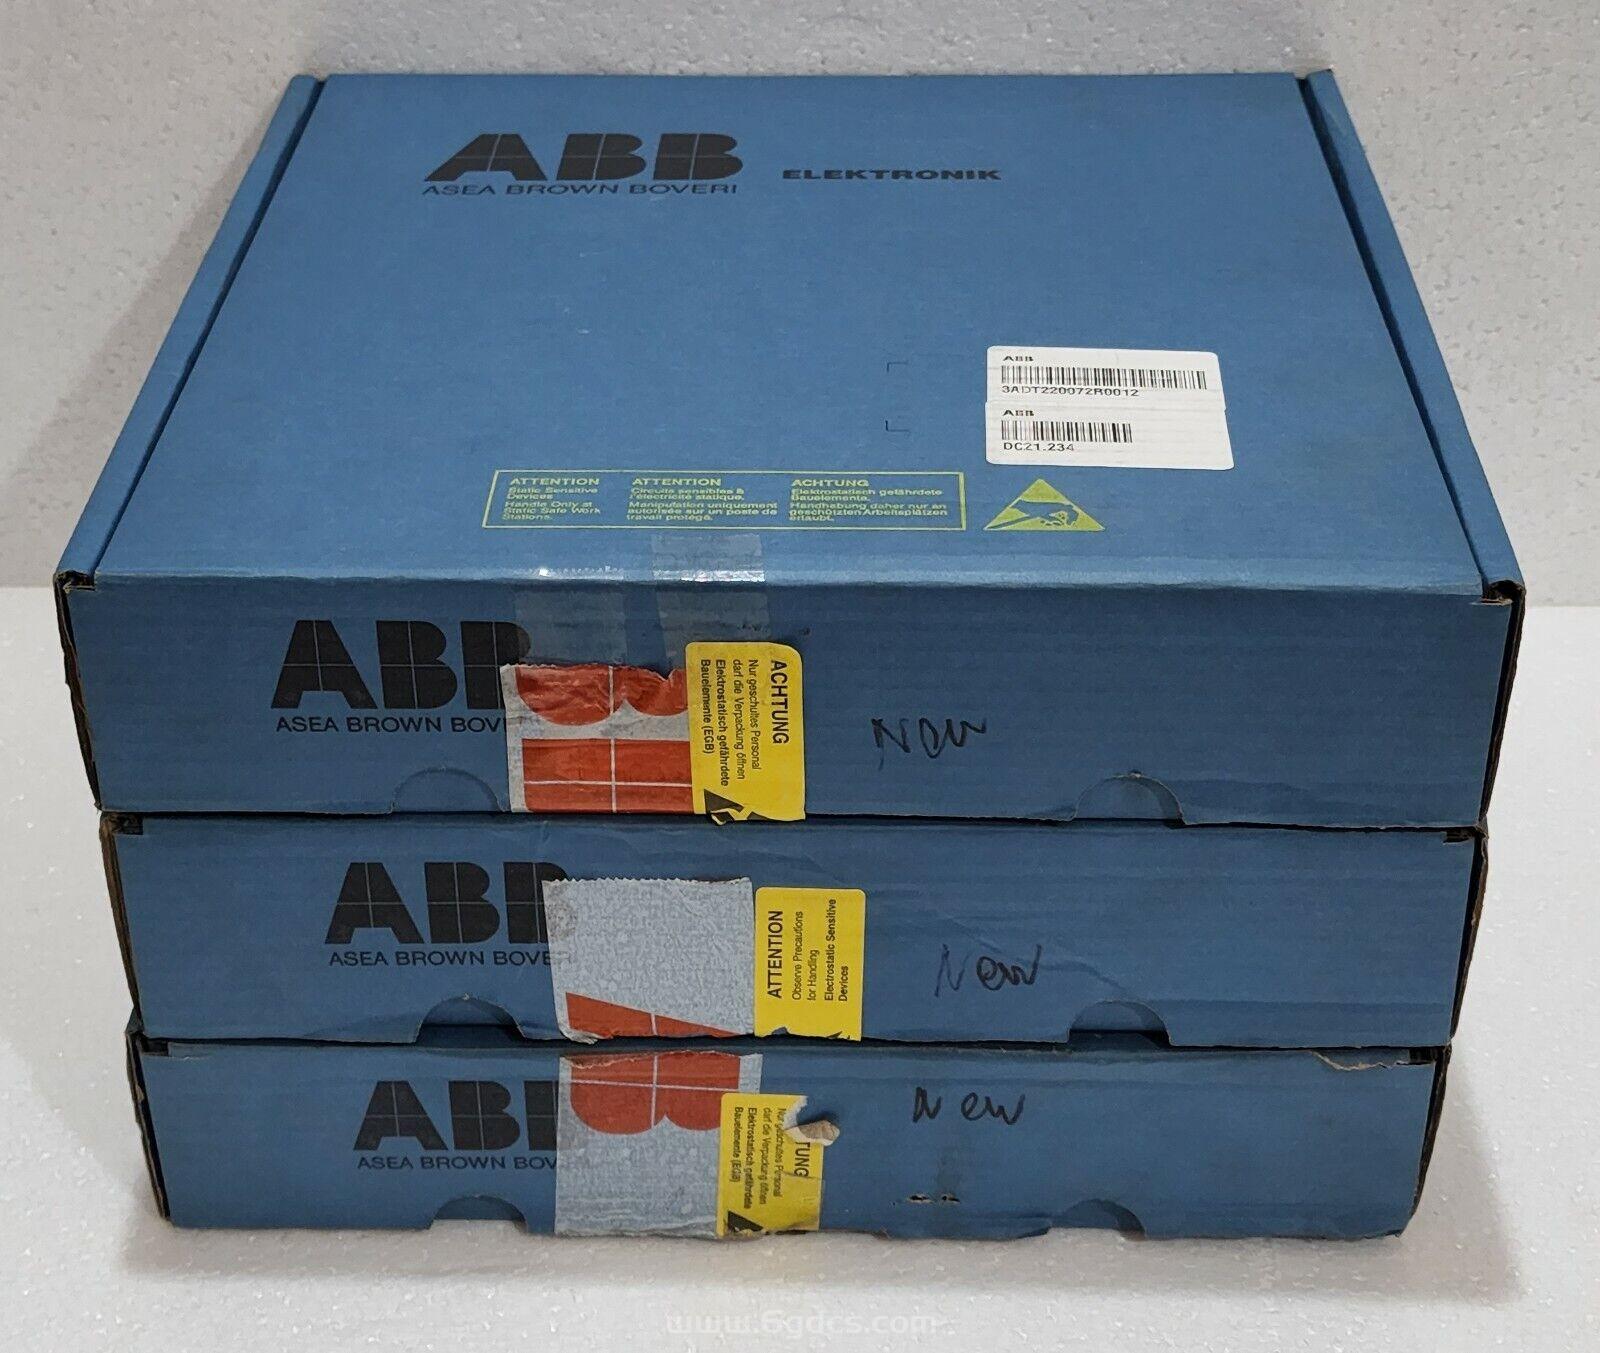 (3BHB003230R0101 驱动板模块)进口 ABB的模块 全新现货原装供应 发货快 大量库存